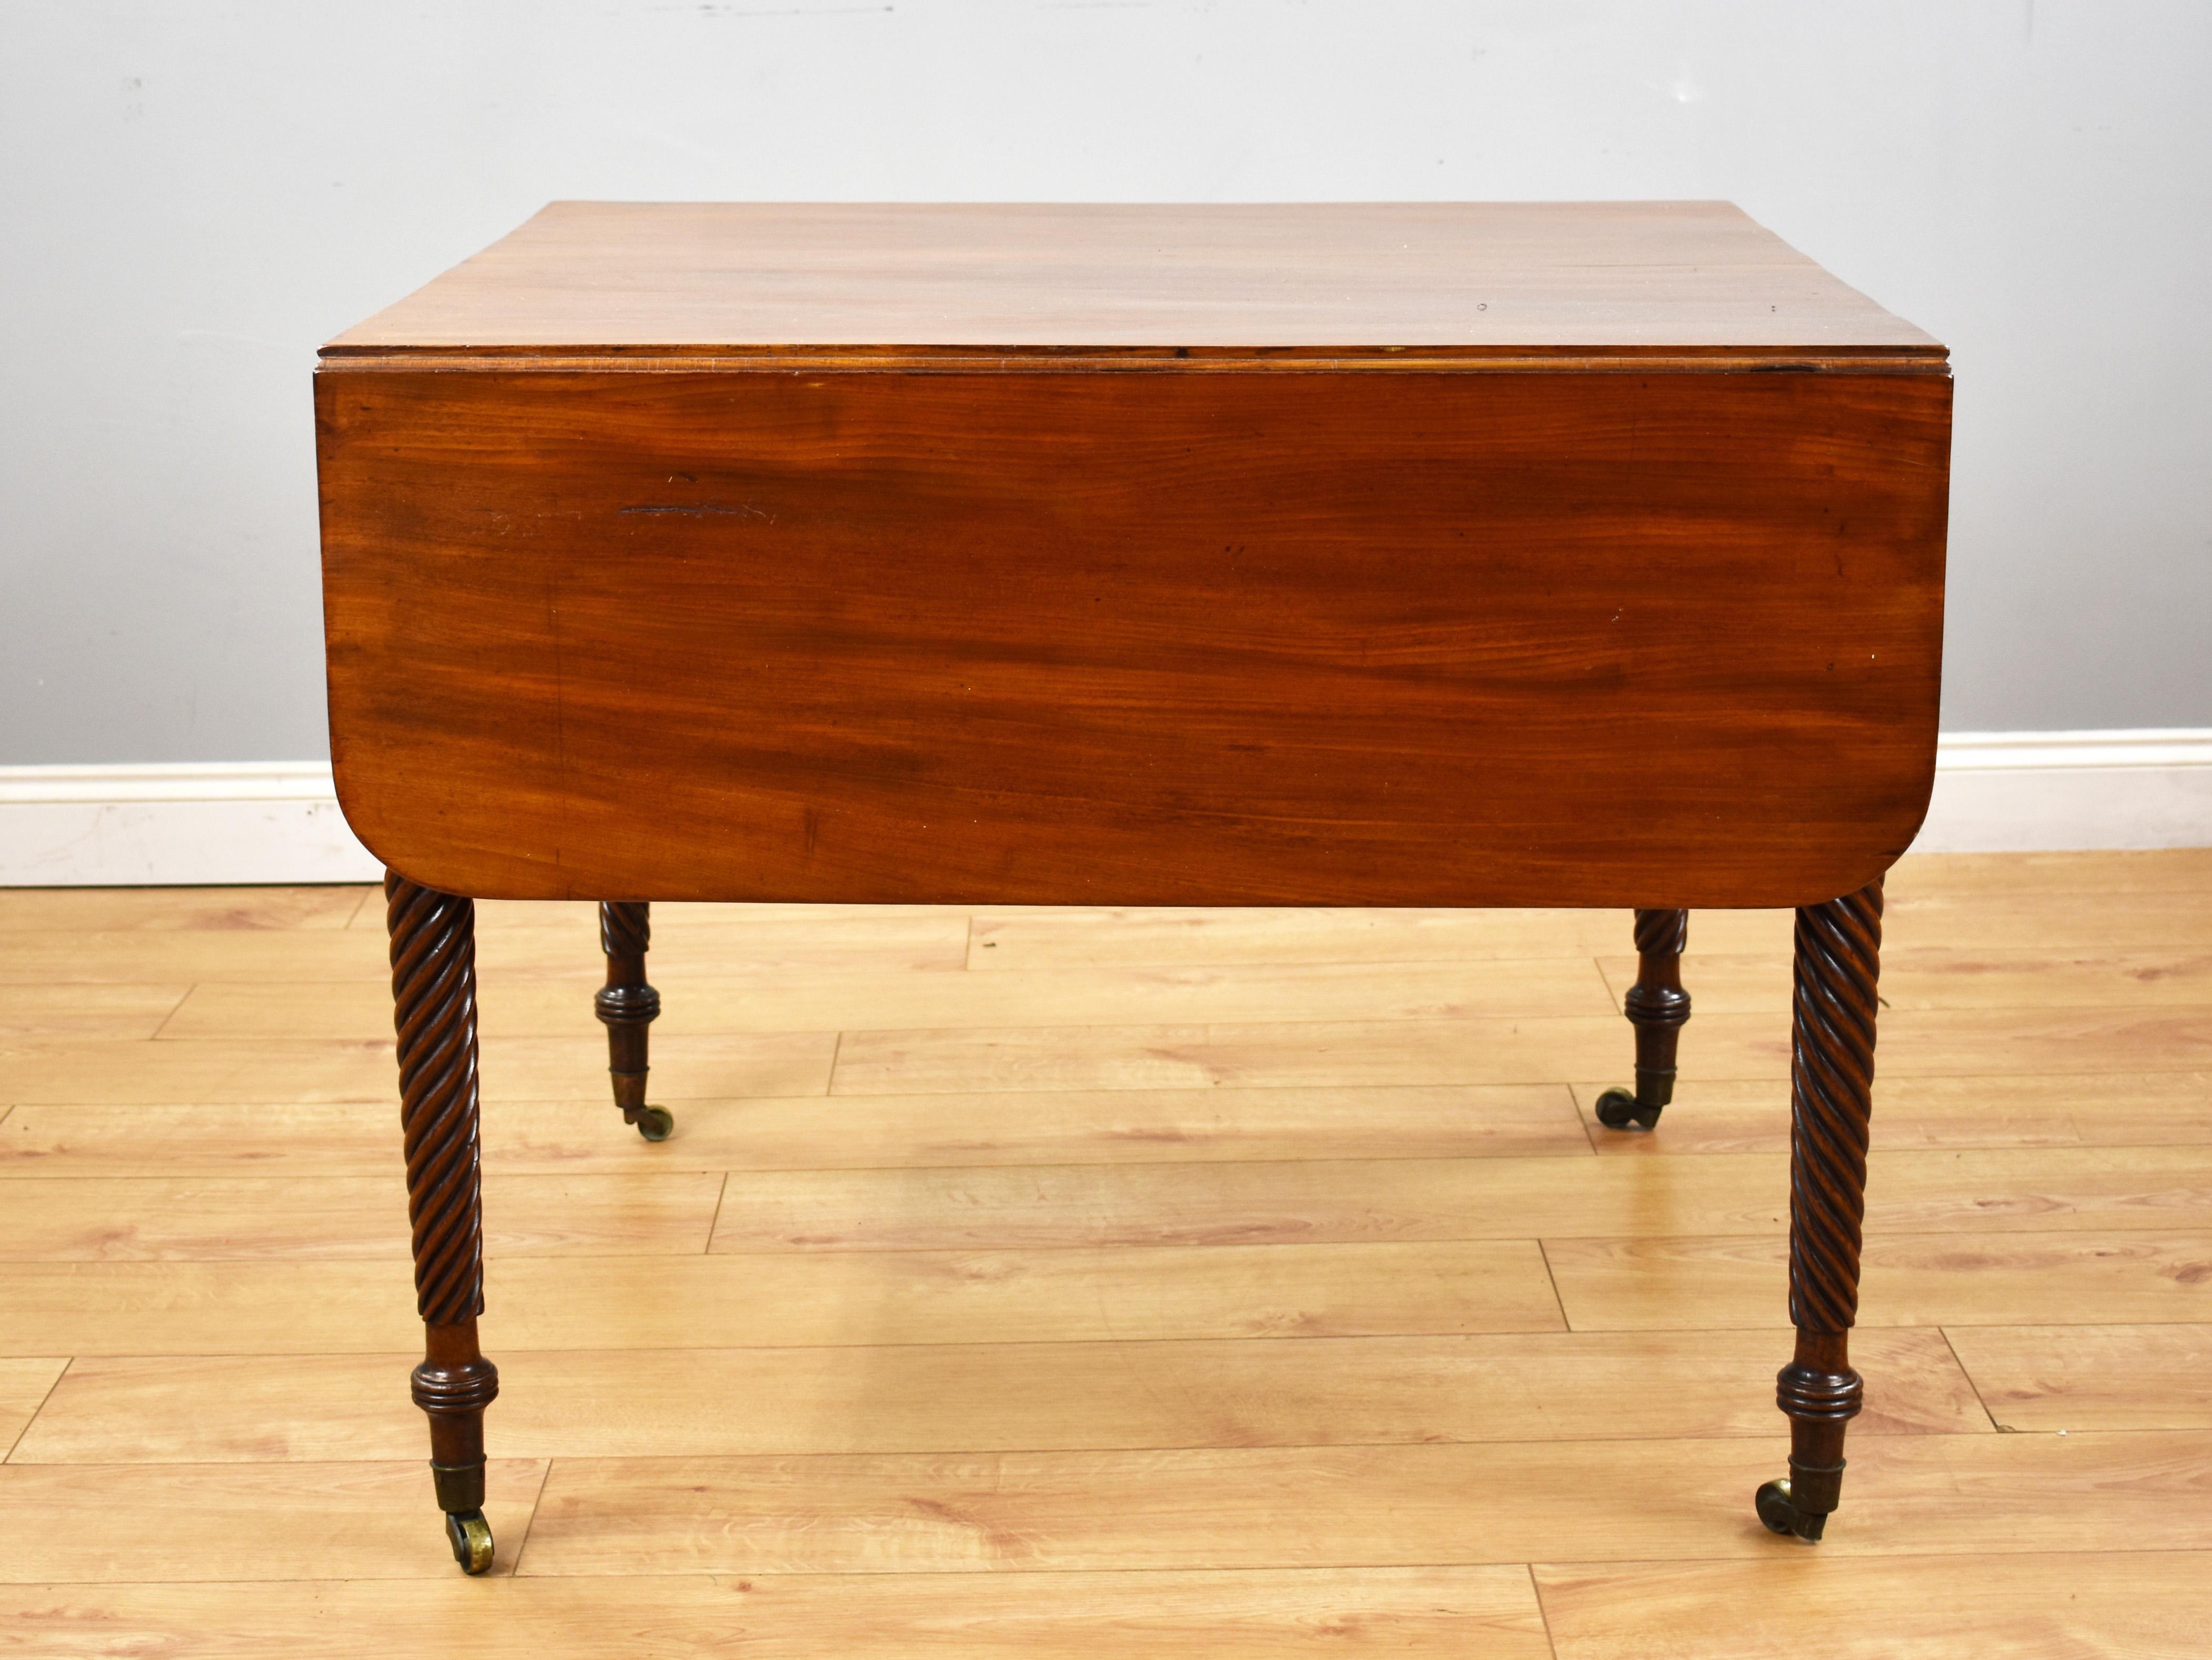 19th Century English Regency Mahogany Drop-Leaf Table For Sale 7